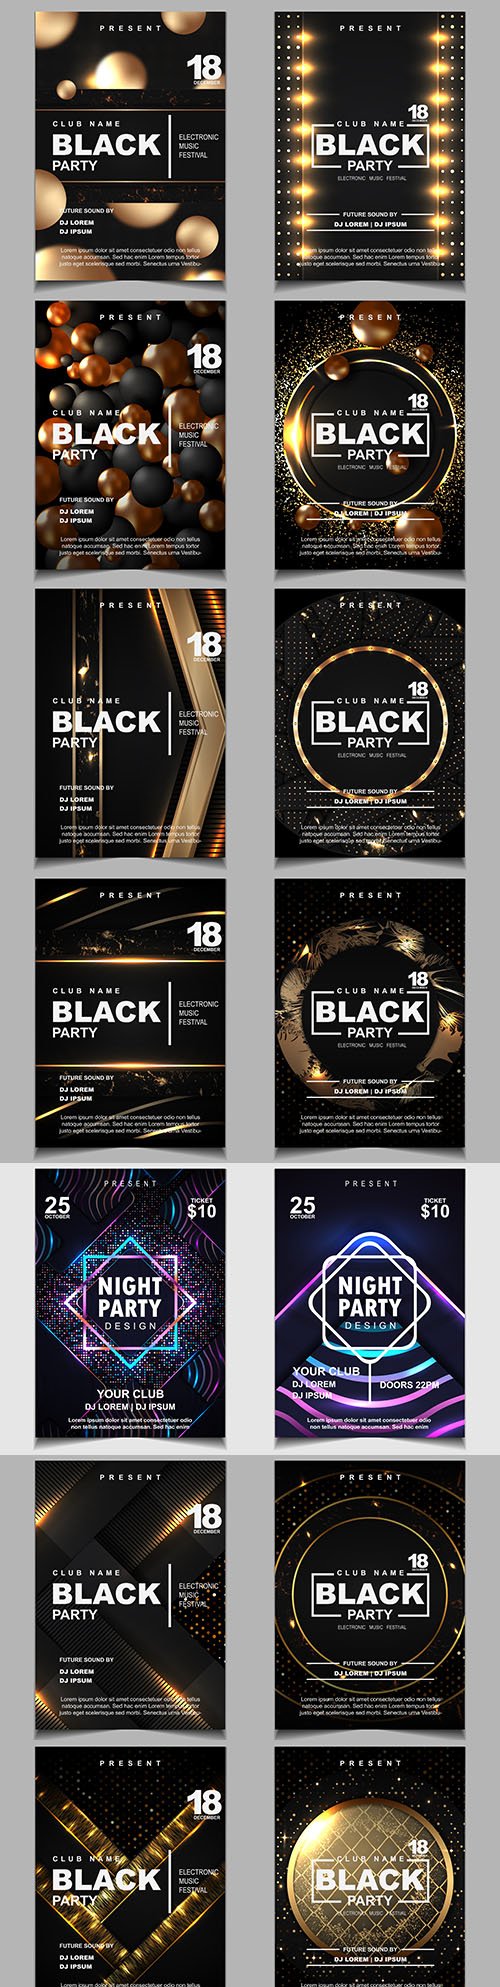 Black and gold nightclub flyer design poster